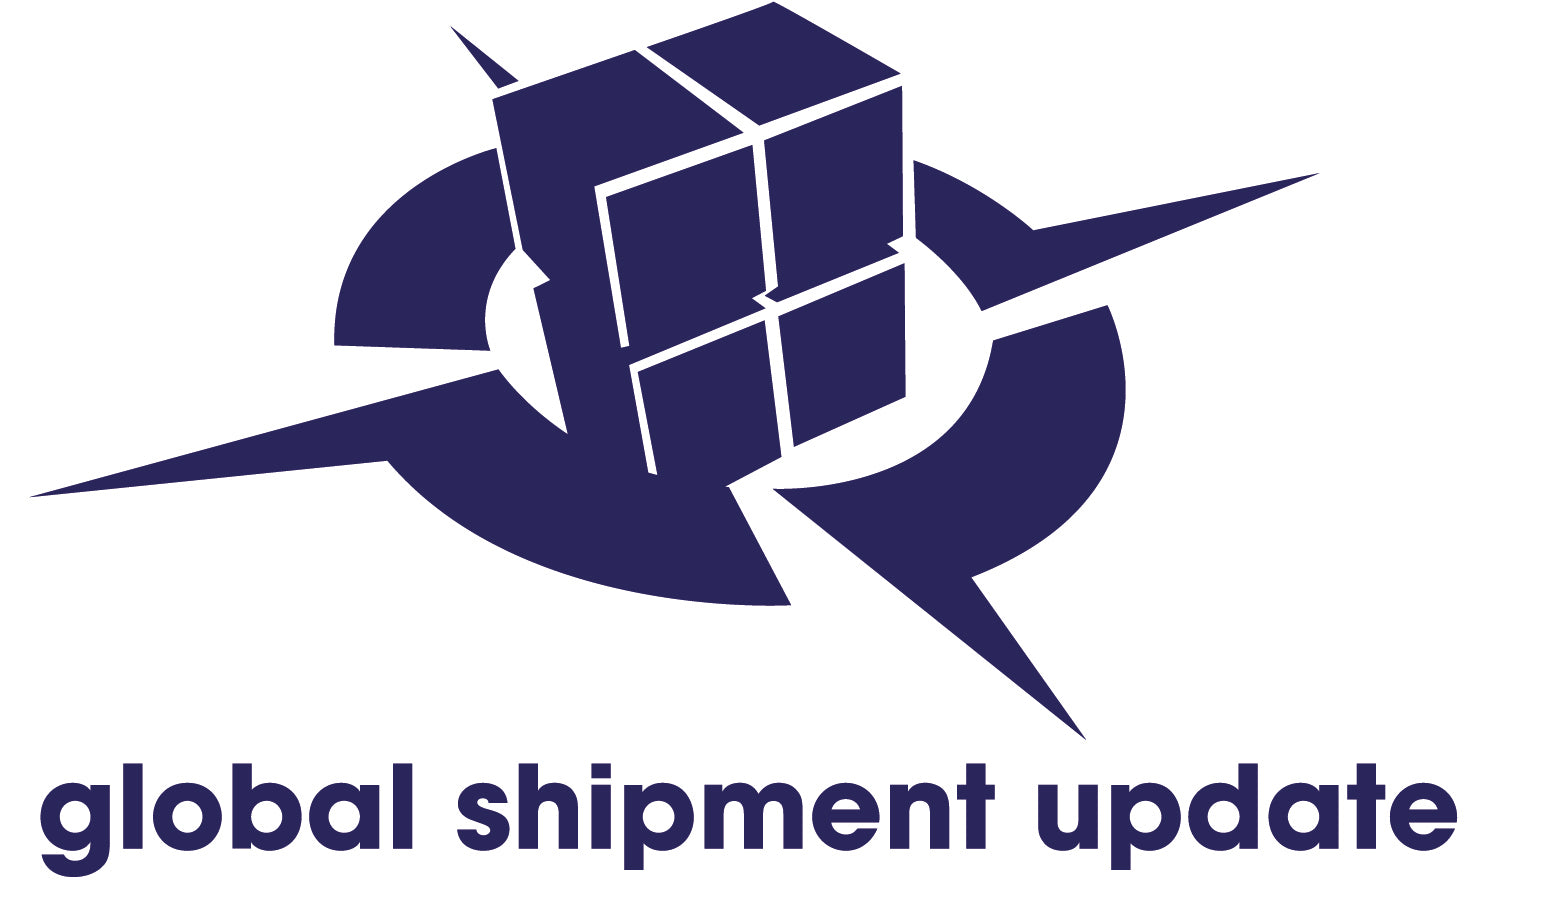 Global shipment information update based on regions - important!